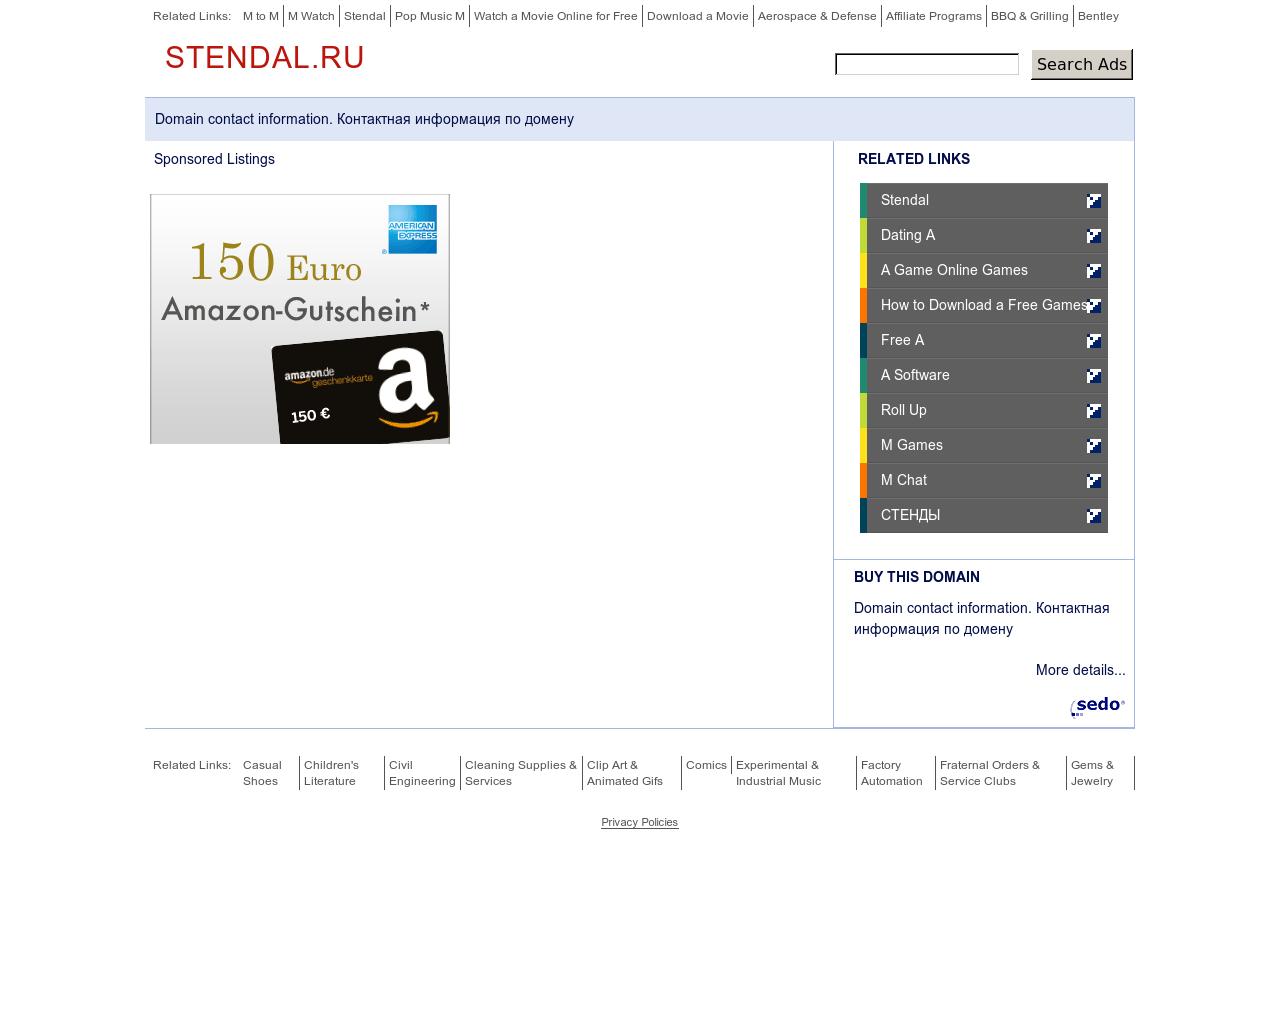 Изображение сайта stendal.ru в разрешении 1280x1024